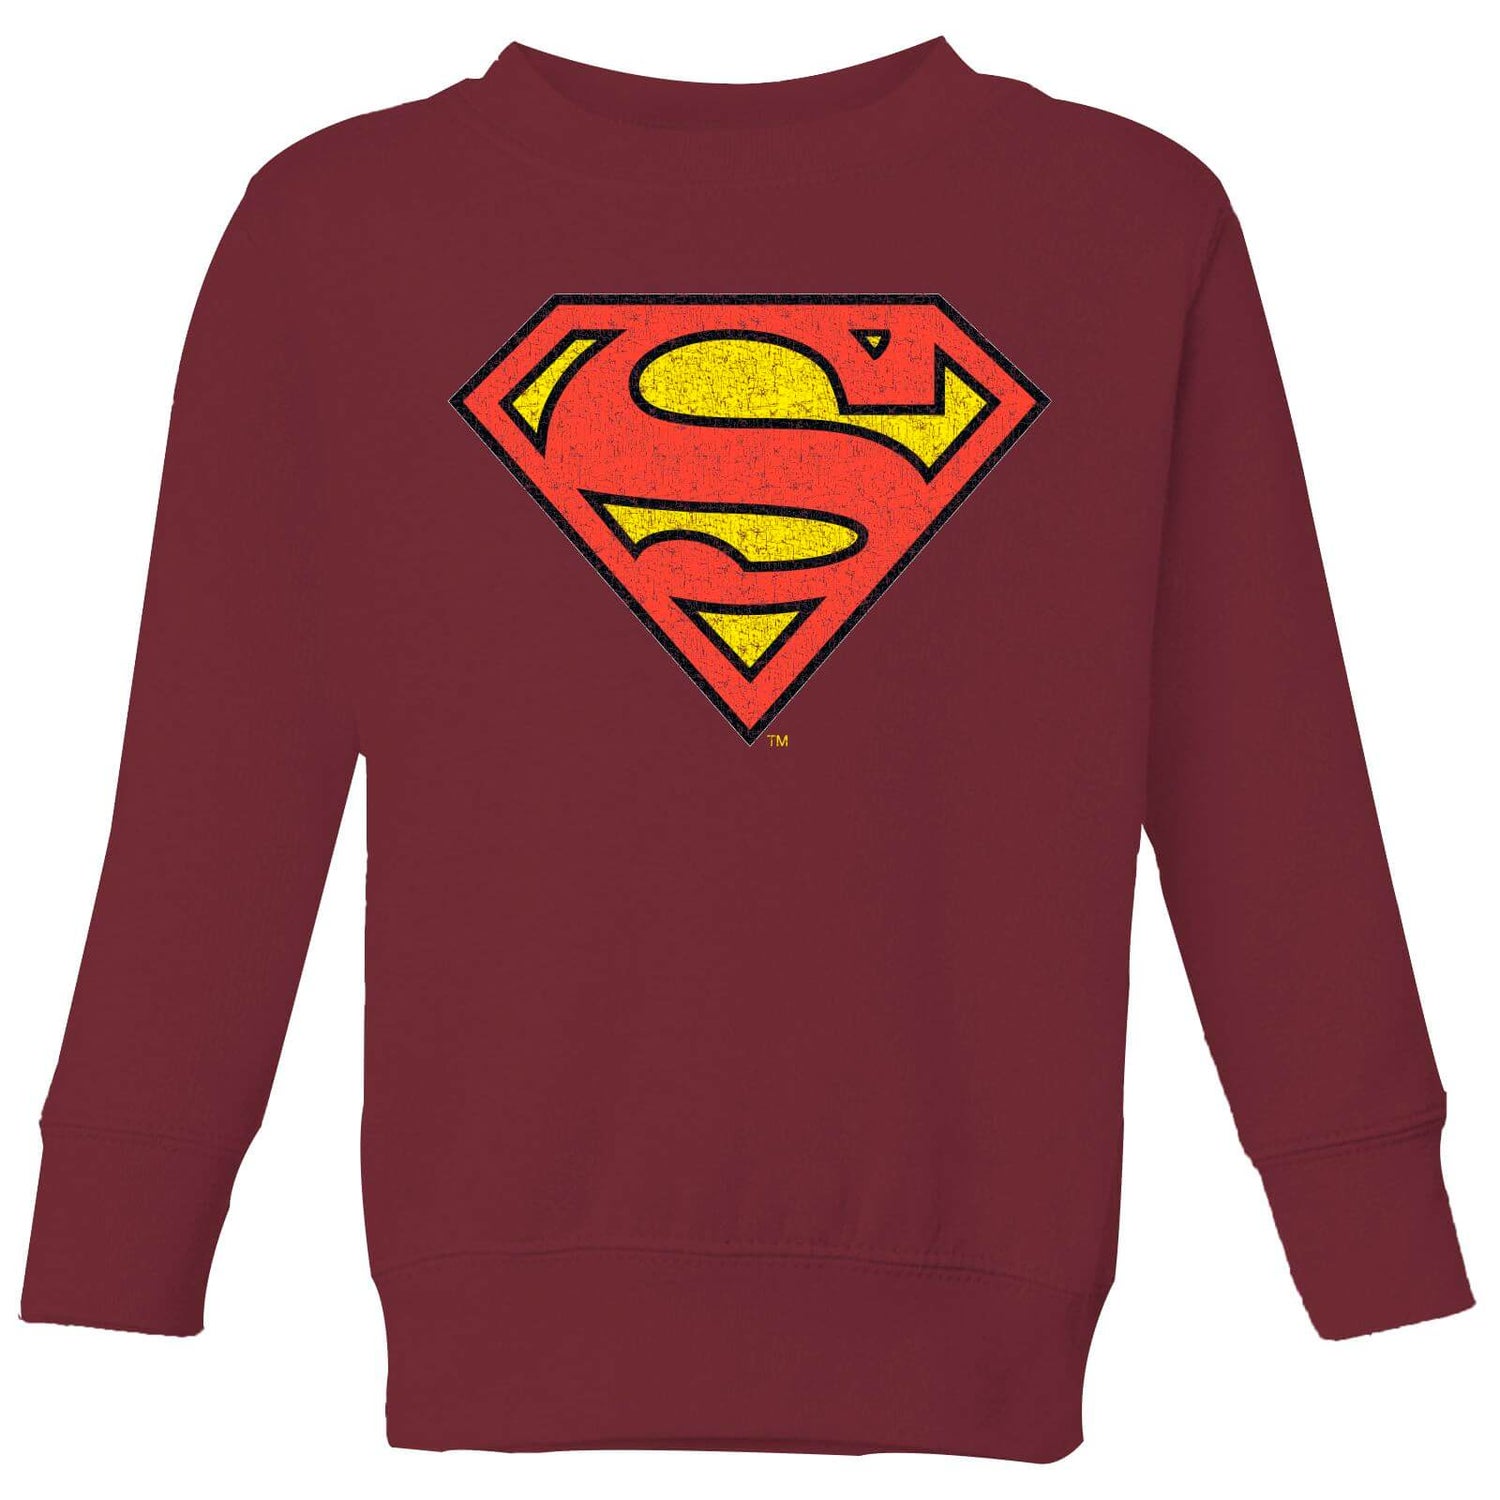 Official Superman Crackle Logo Kids' Sweatshirt - Burgundy